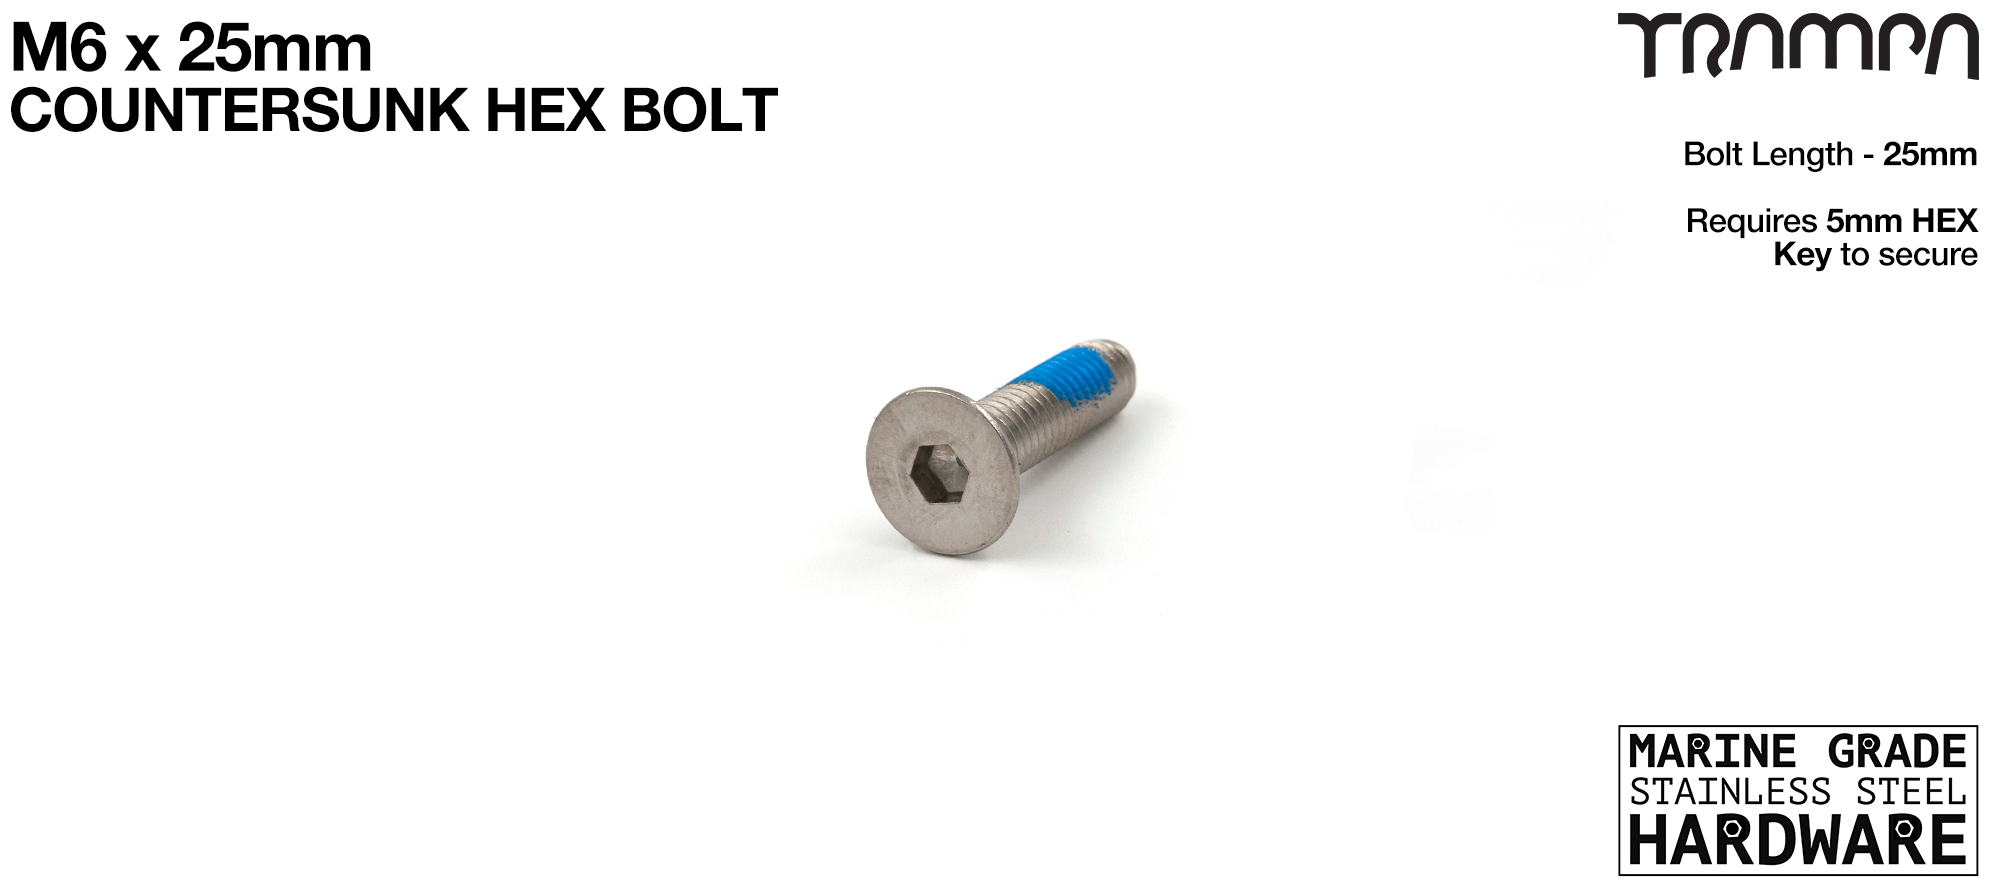 M6 x 25mm Countersunk Allen-Key Bolt - Marine Grade Stainless steel with locking paste